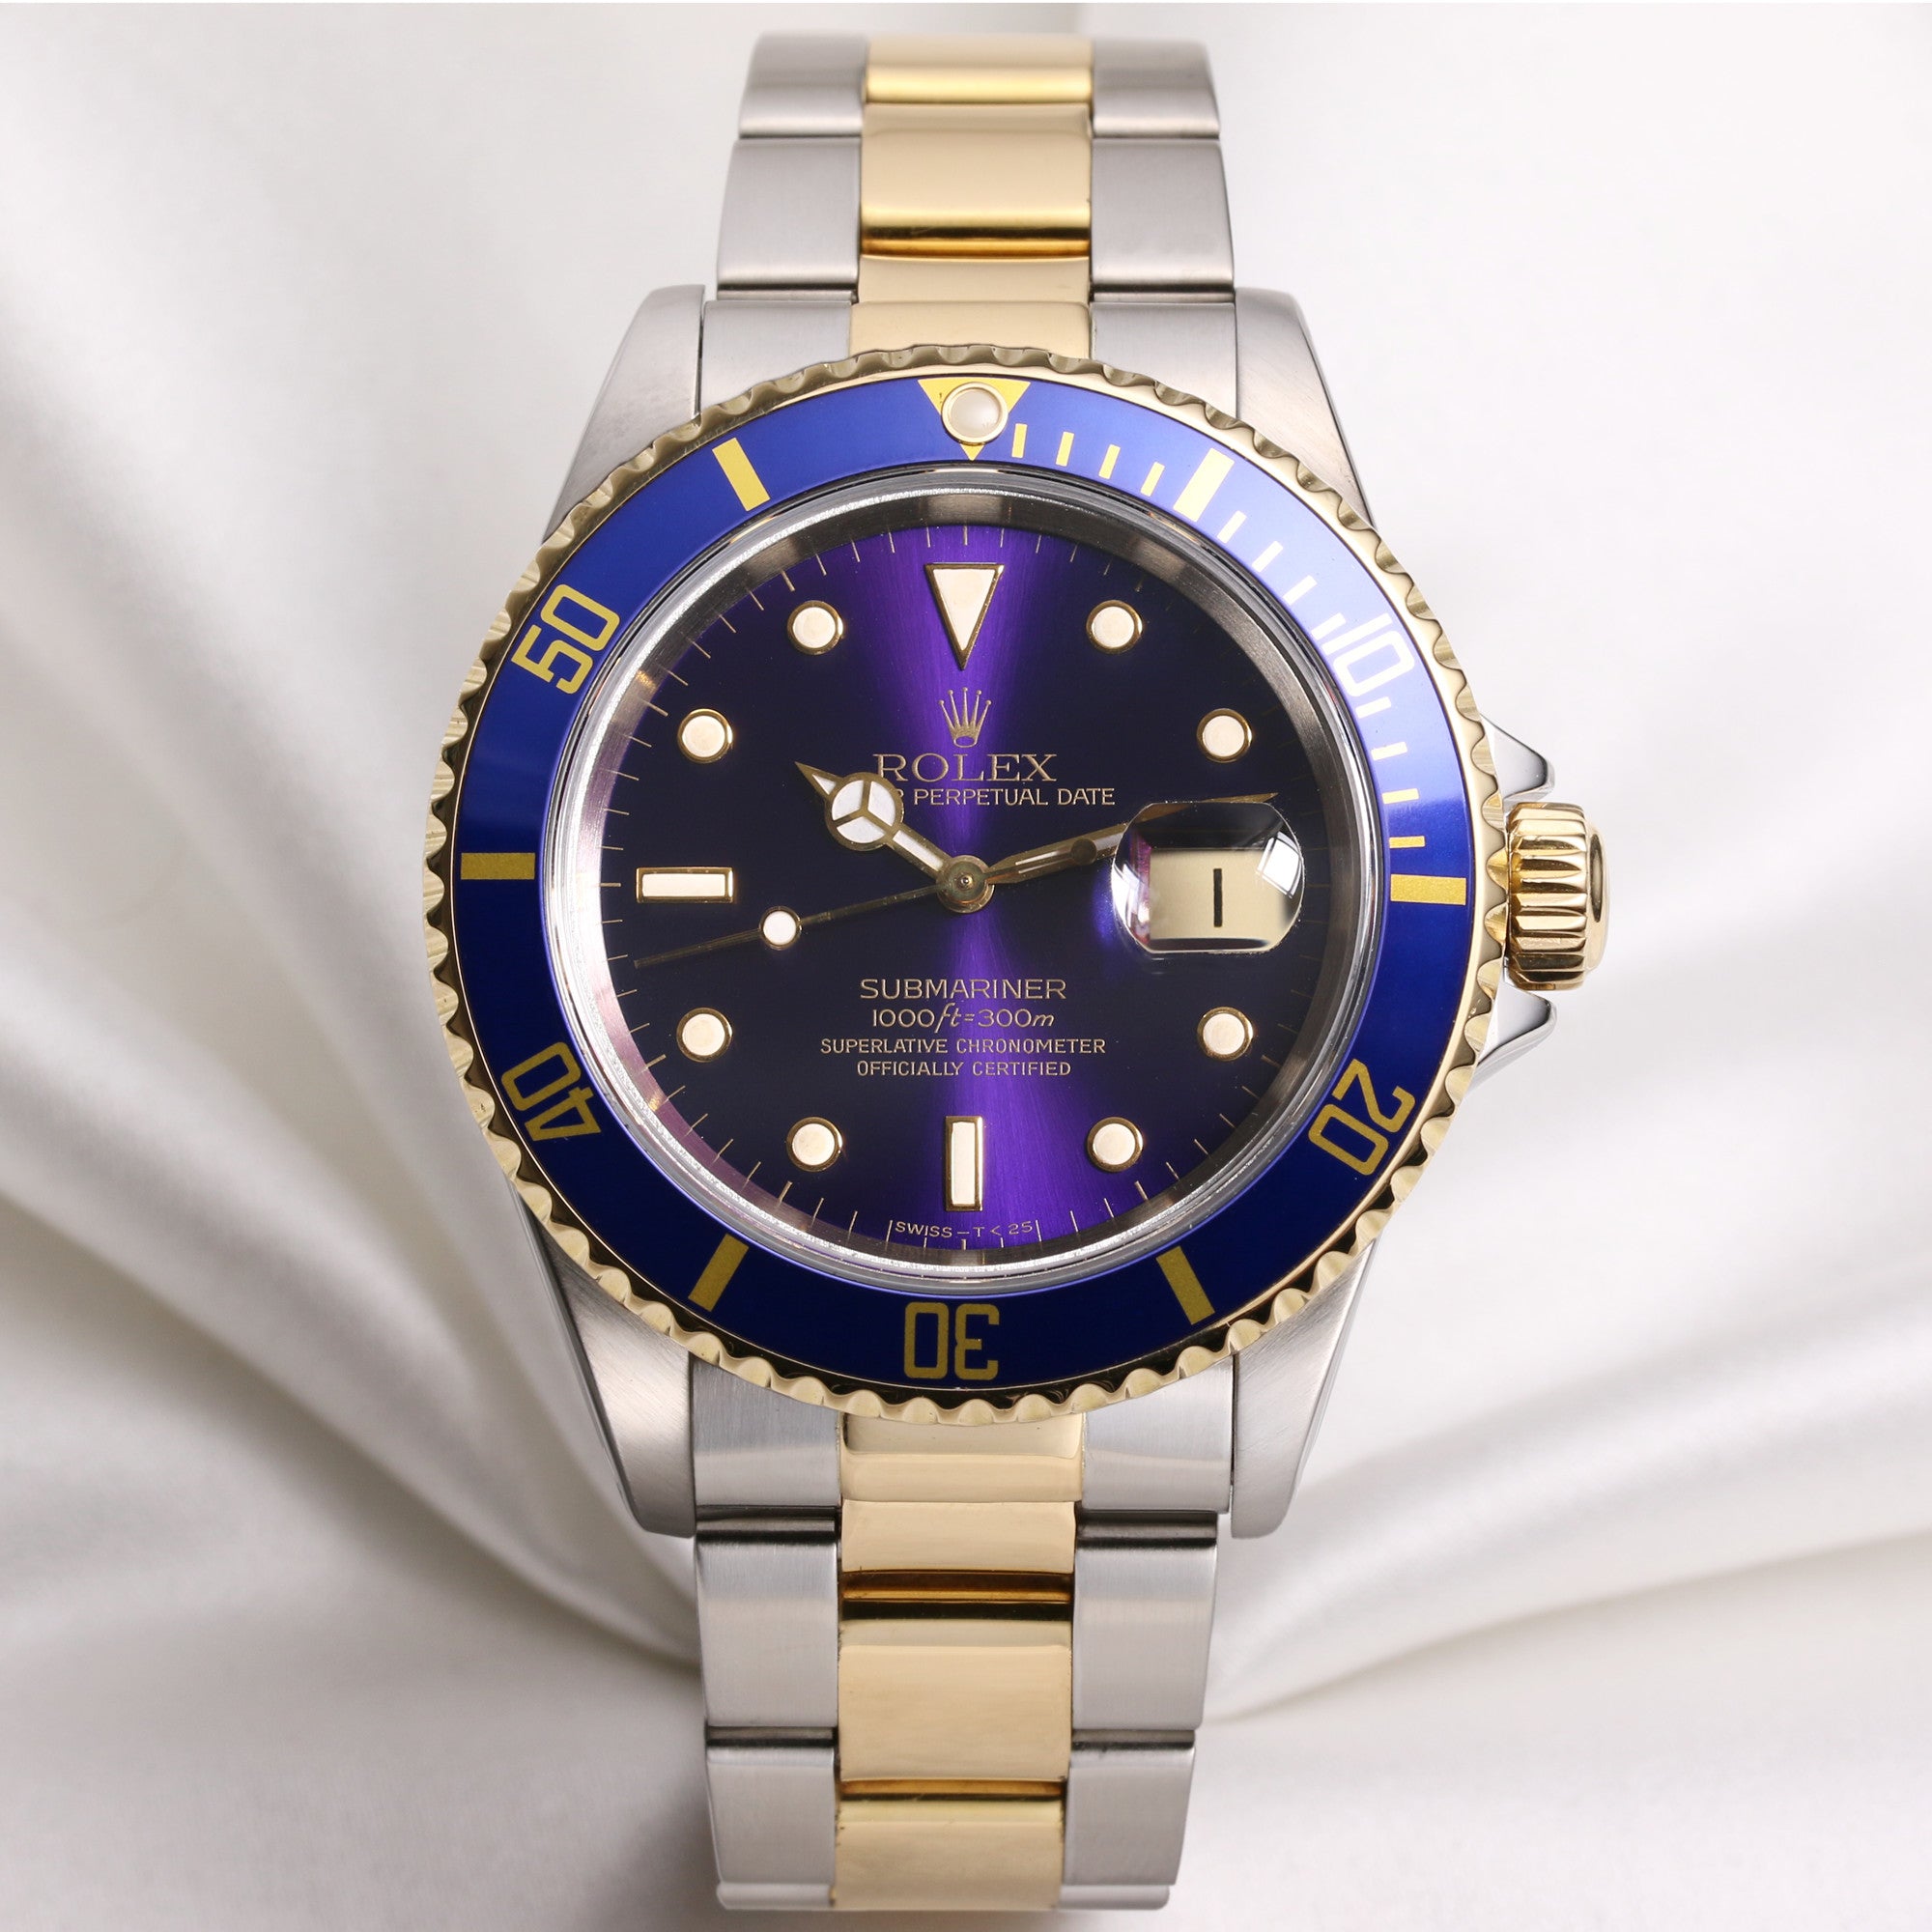 Rolex Submariner Date 16613 Steel & Dial Watch Collectors